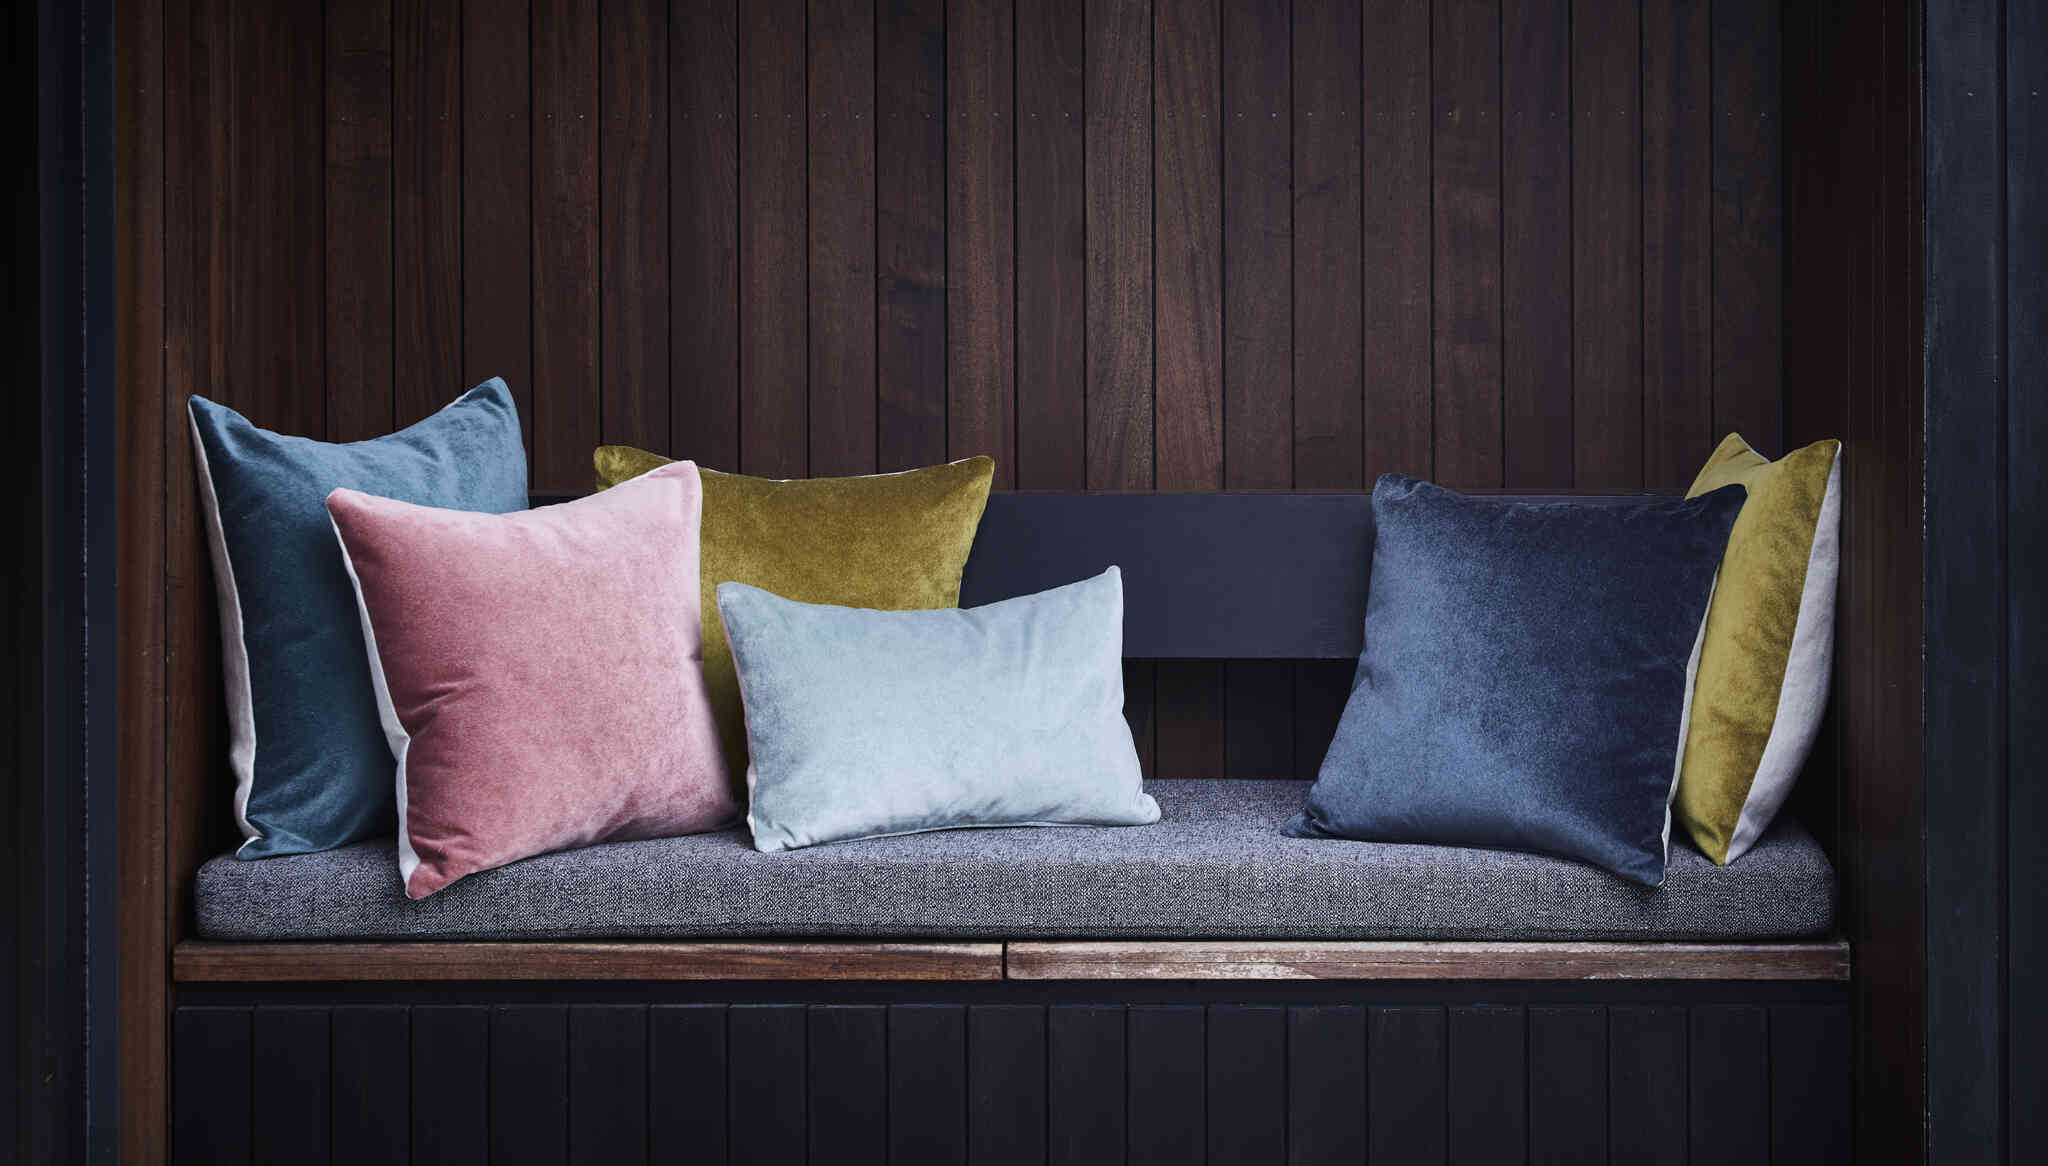 Linen Backed Cushions Create a Calm Christmas Interior Arlo & Jacob